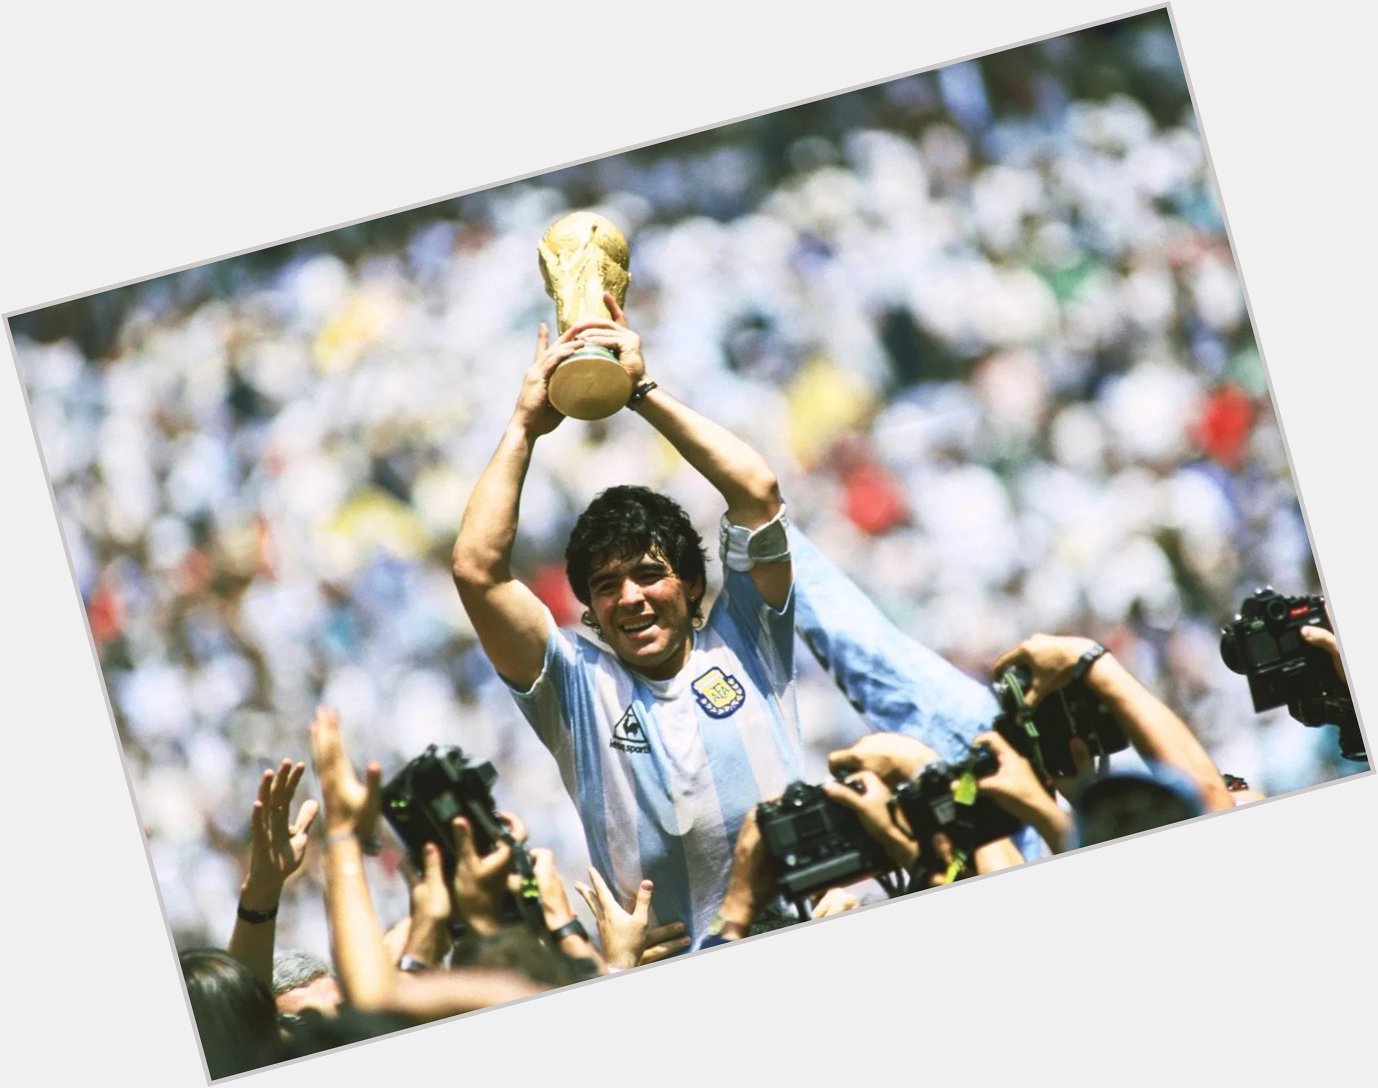 Diego Maradona would have turned 62 today.

Happy birthday, legend! 